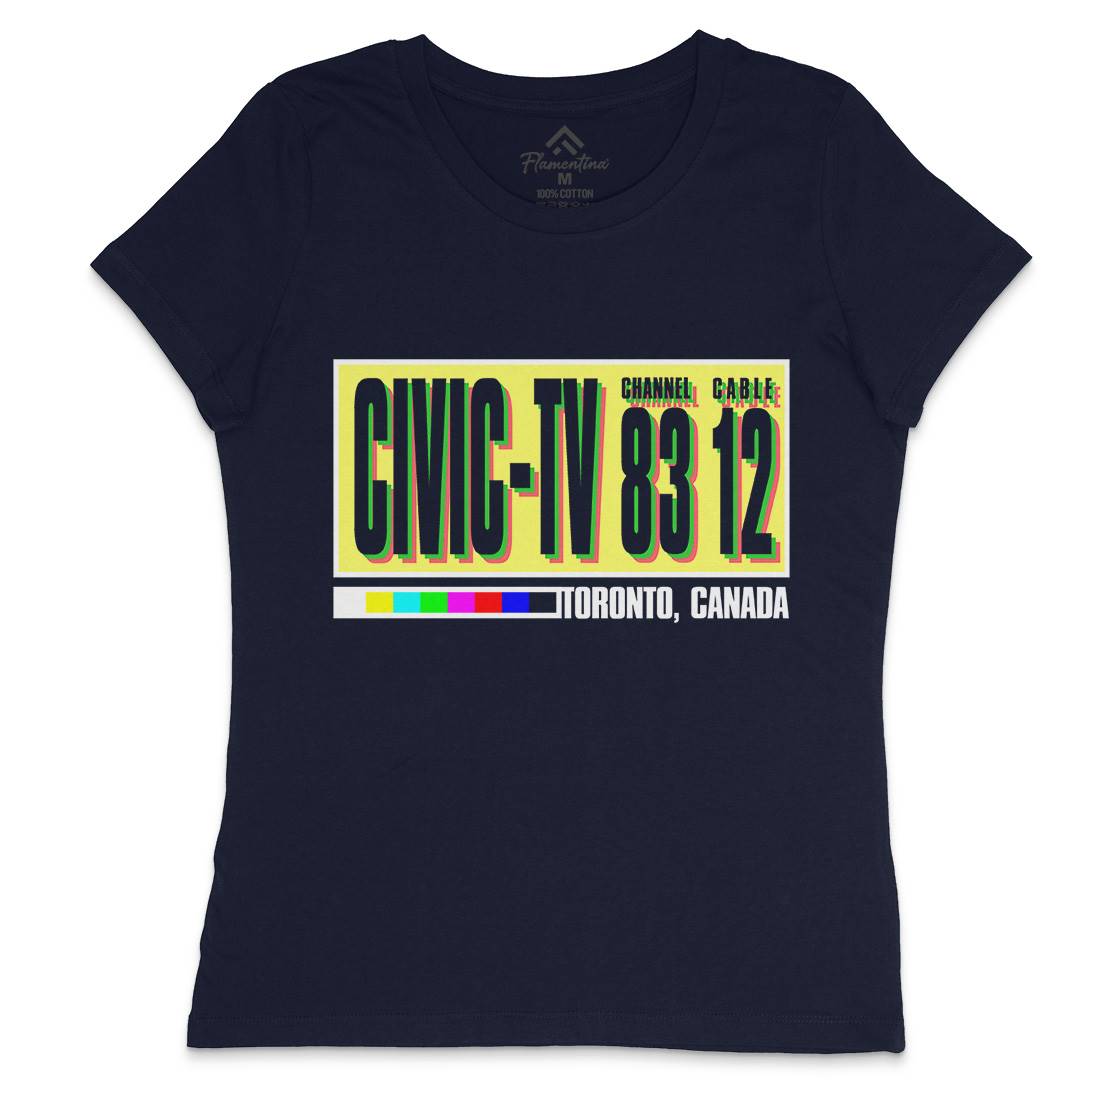 Civic-Tv Womens Crew Neck T-Shirt Media D406